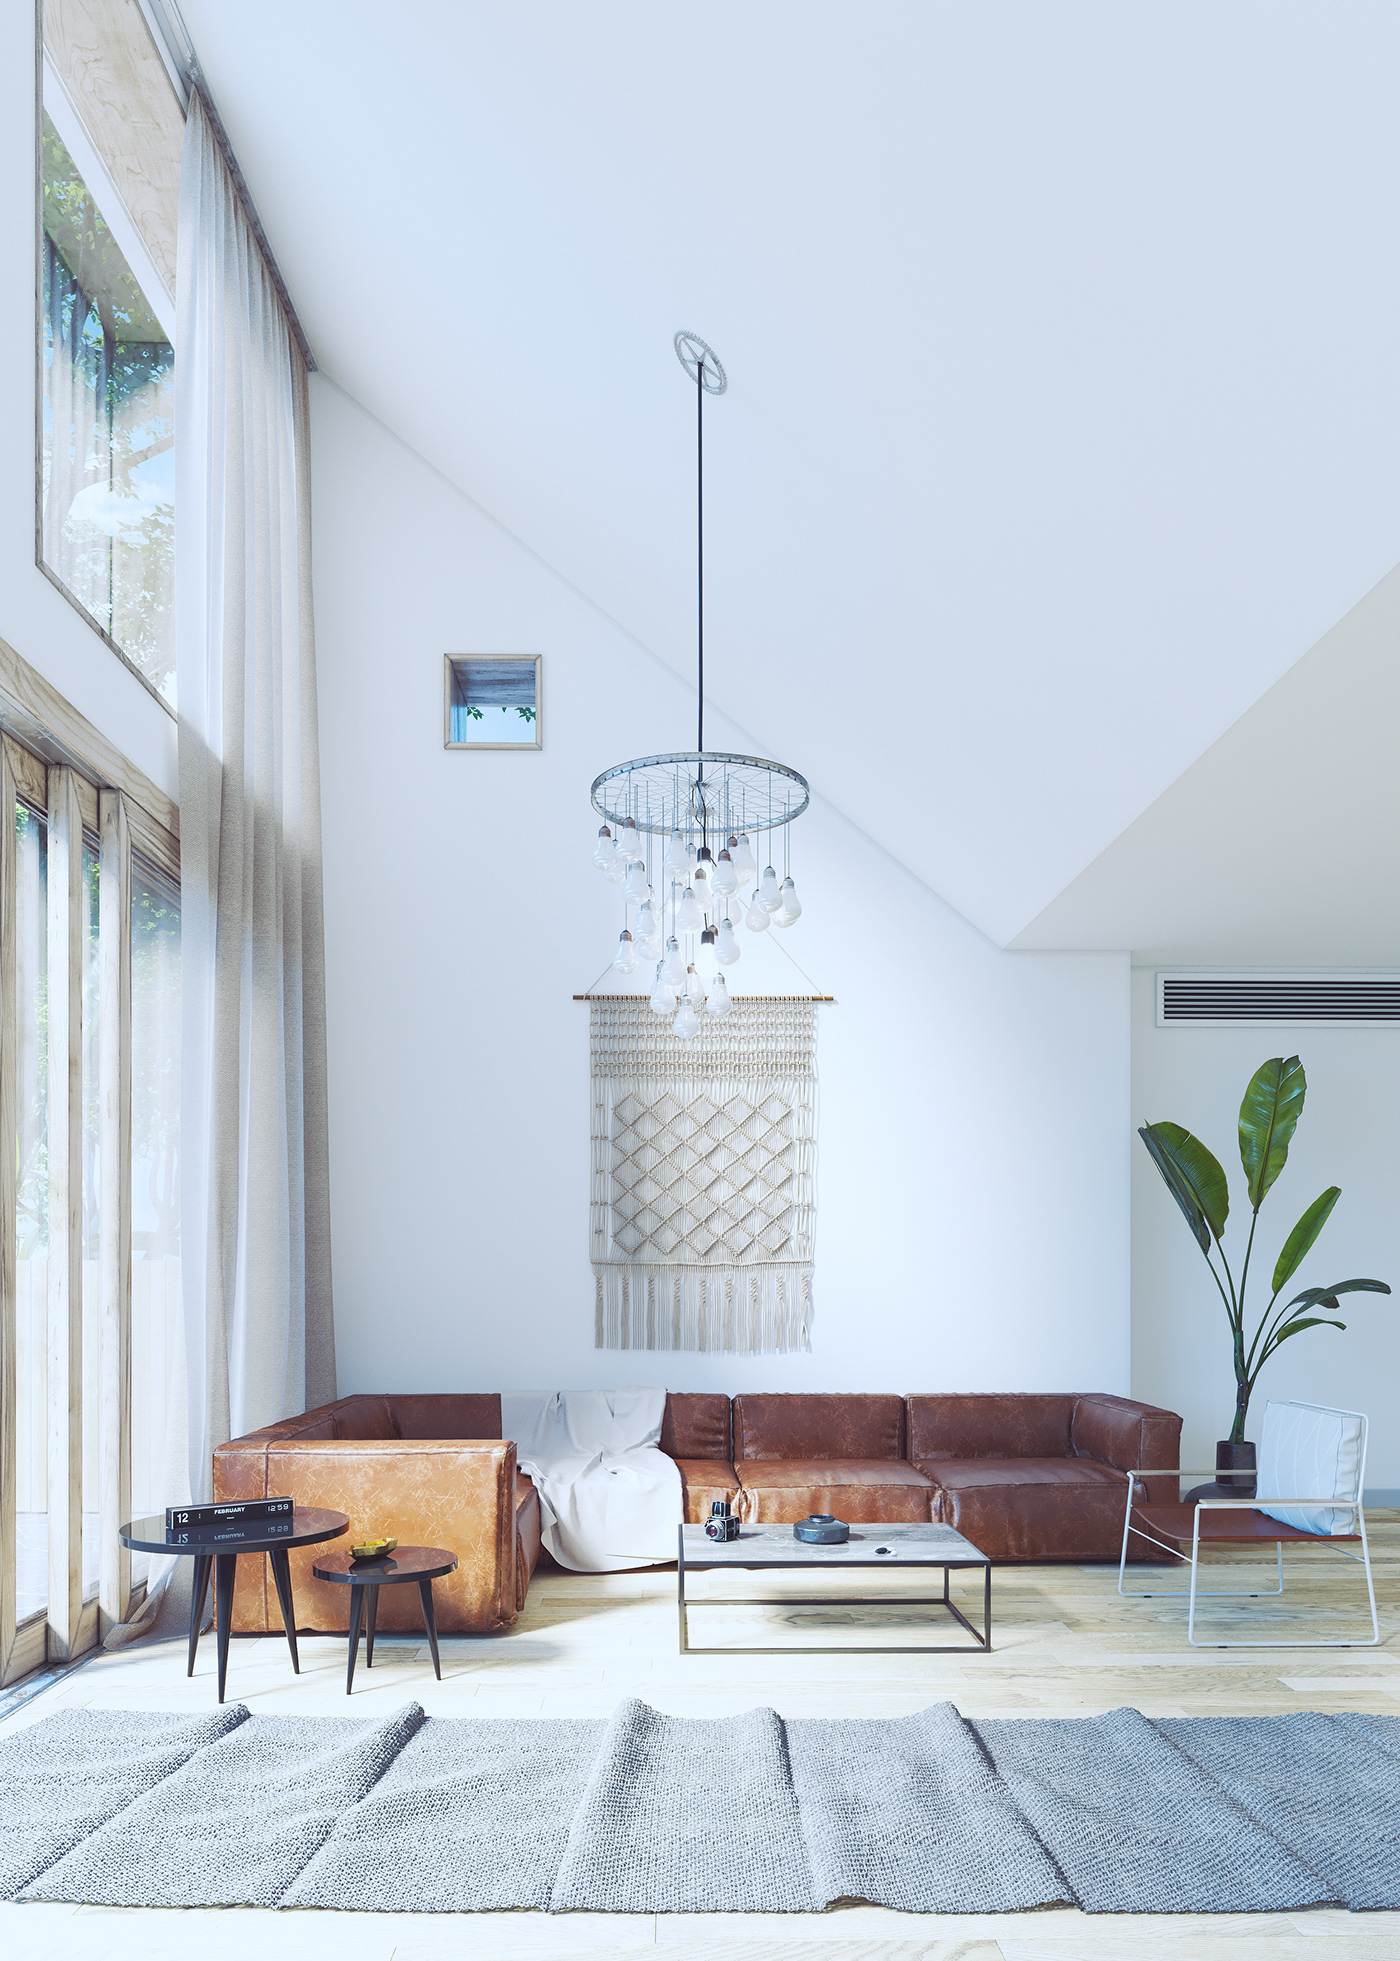 Interior corona house design Render 3dsmax Lamp chair armchair sofa